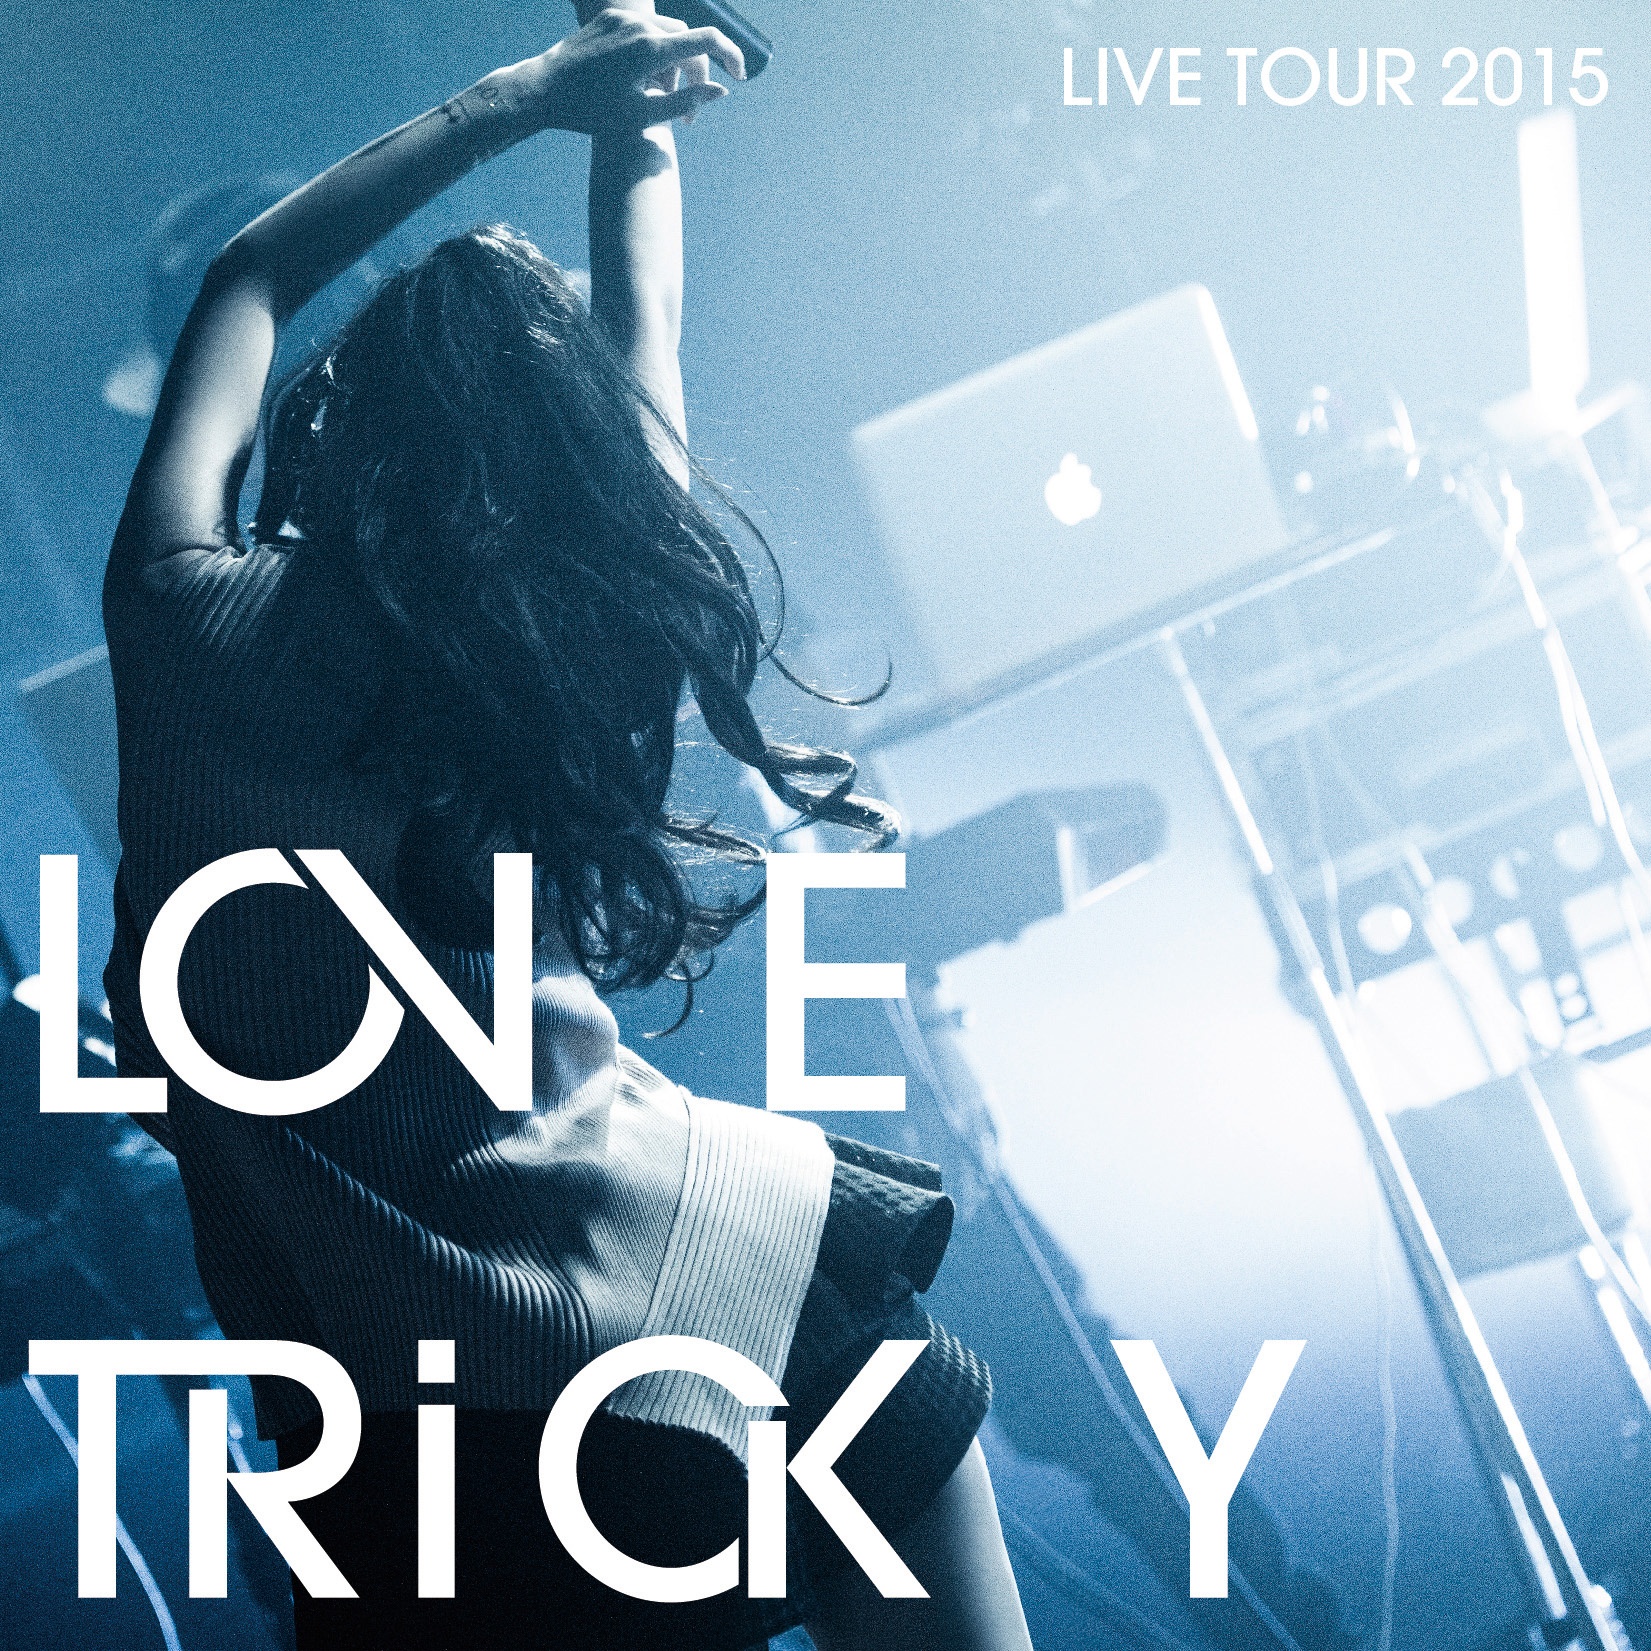 I' m lonely LOVE TRiCKY LIVE TOUR 2015 ti zhong jian